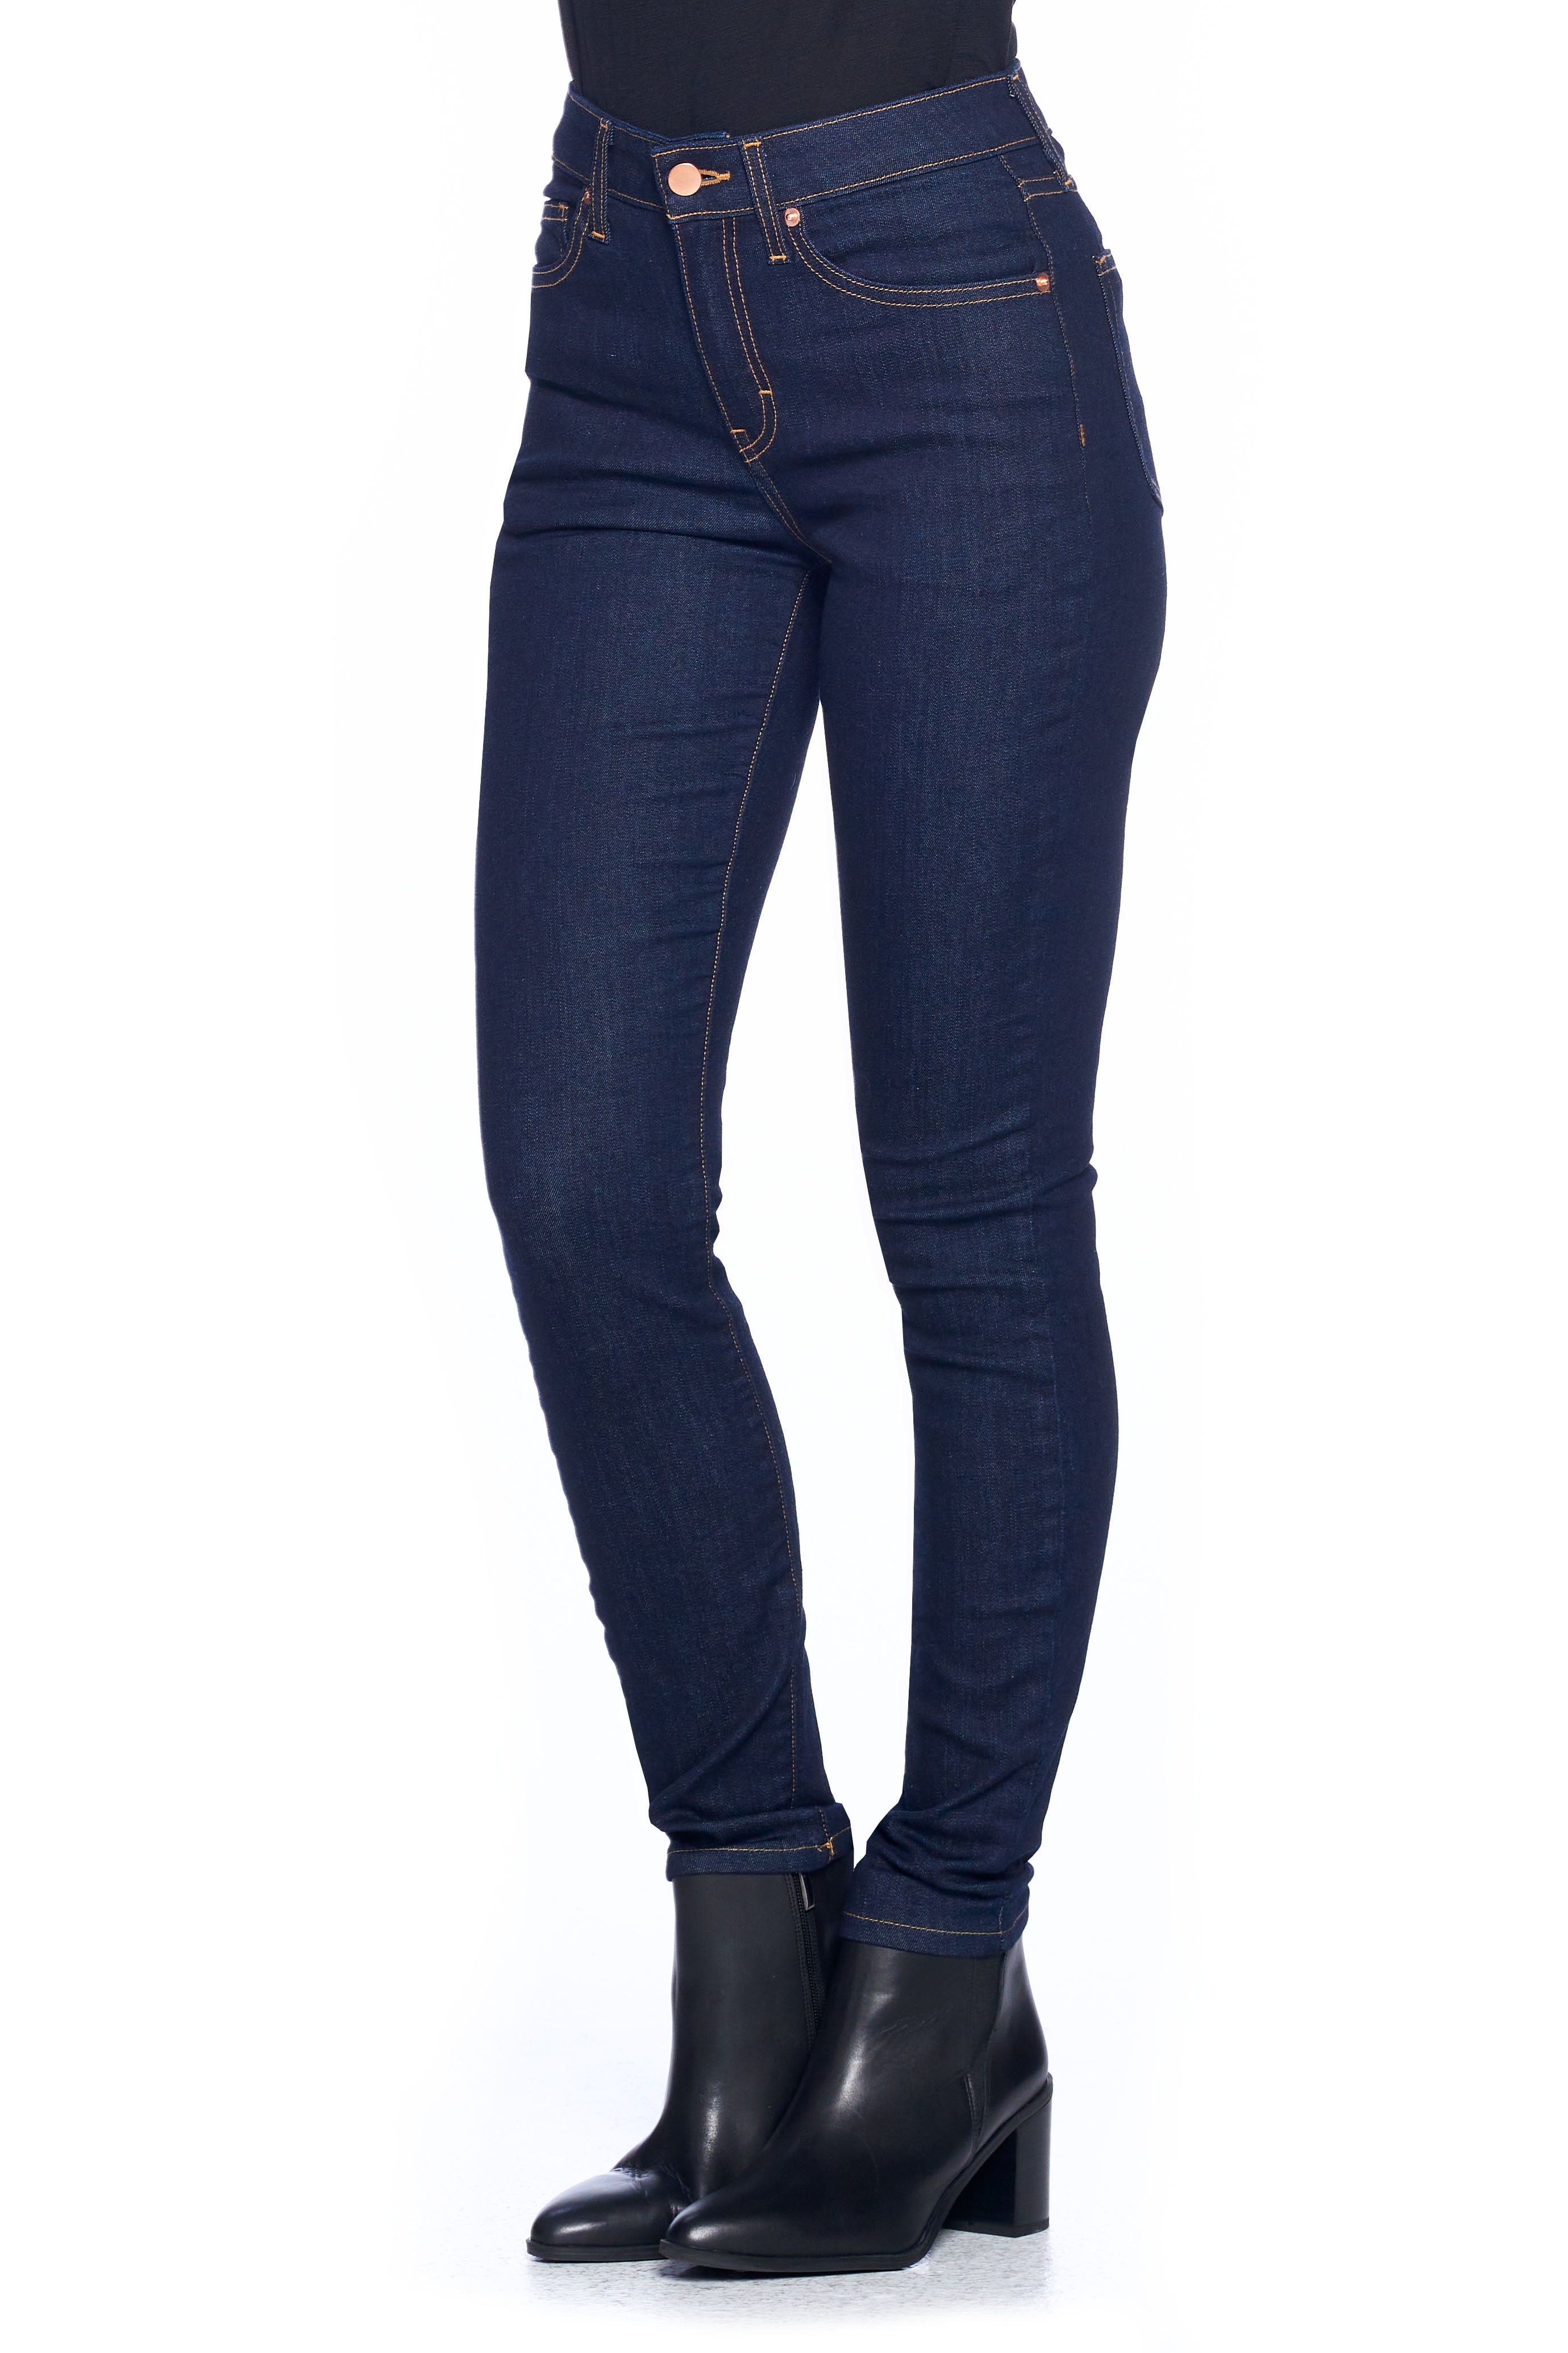 Women's Comfort Skinny Fit Jeans, Dark Indigo